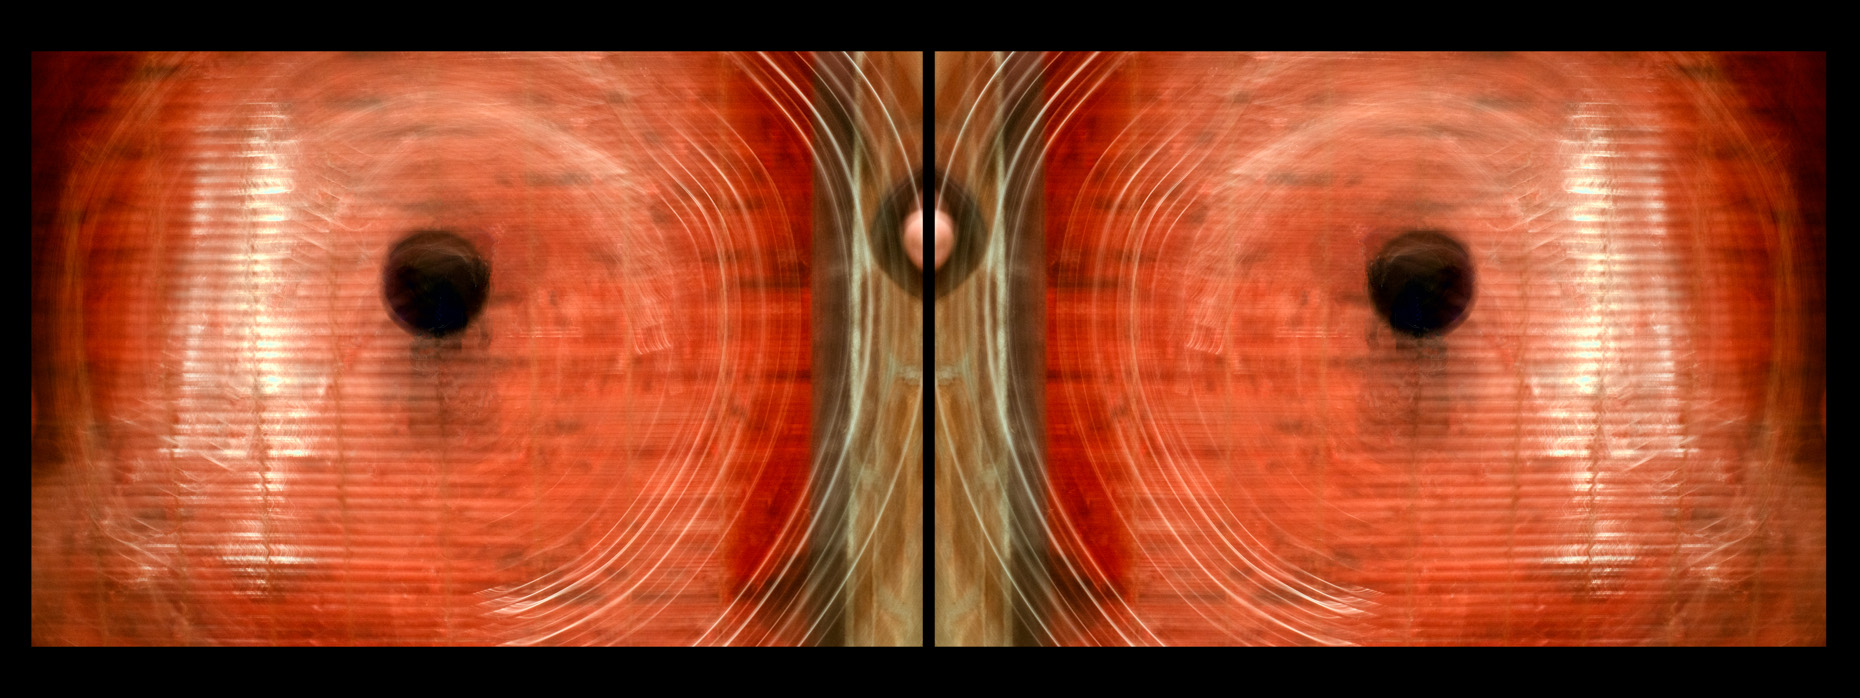 Parallel-Universes-Abstract-Art-Laria-HiWeb-2.jpg